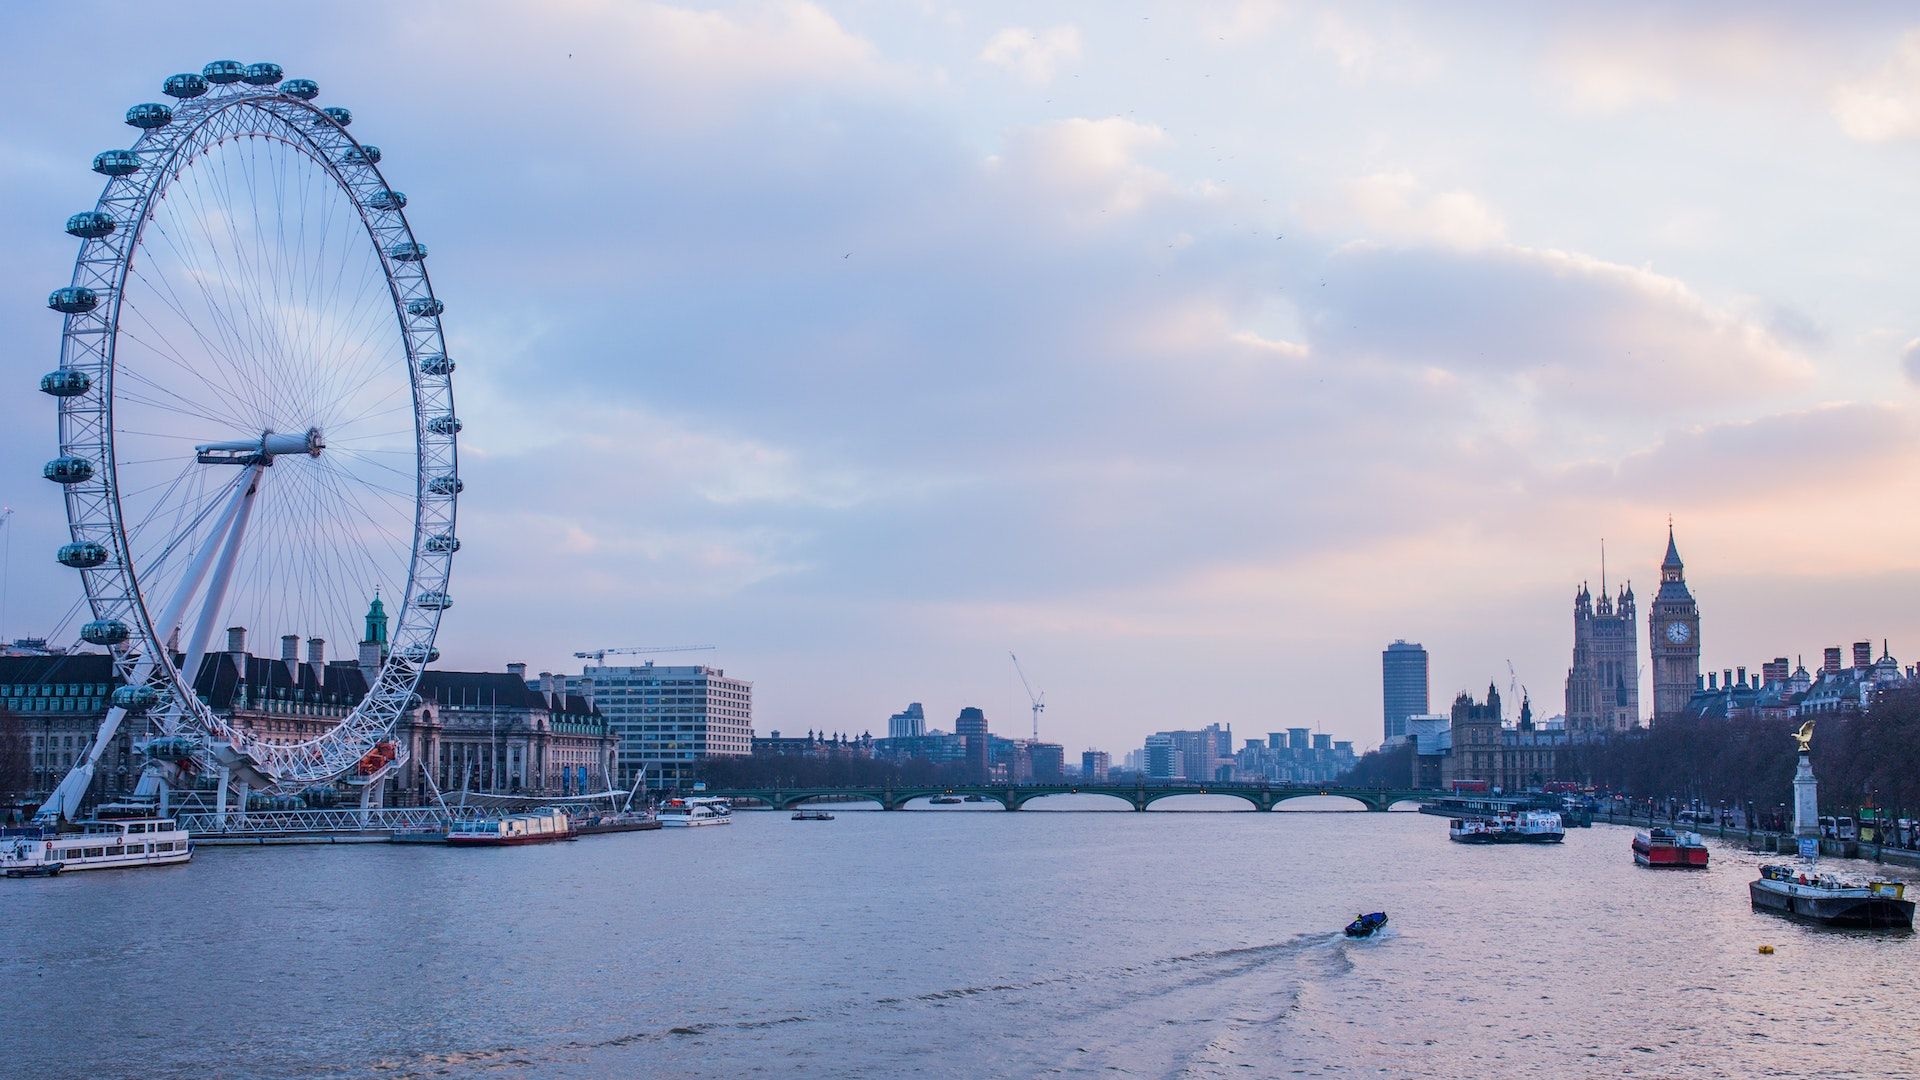 London Eye River Thames during Day Time Wallpaper